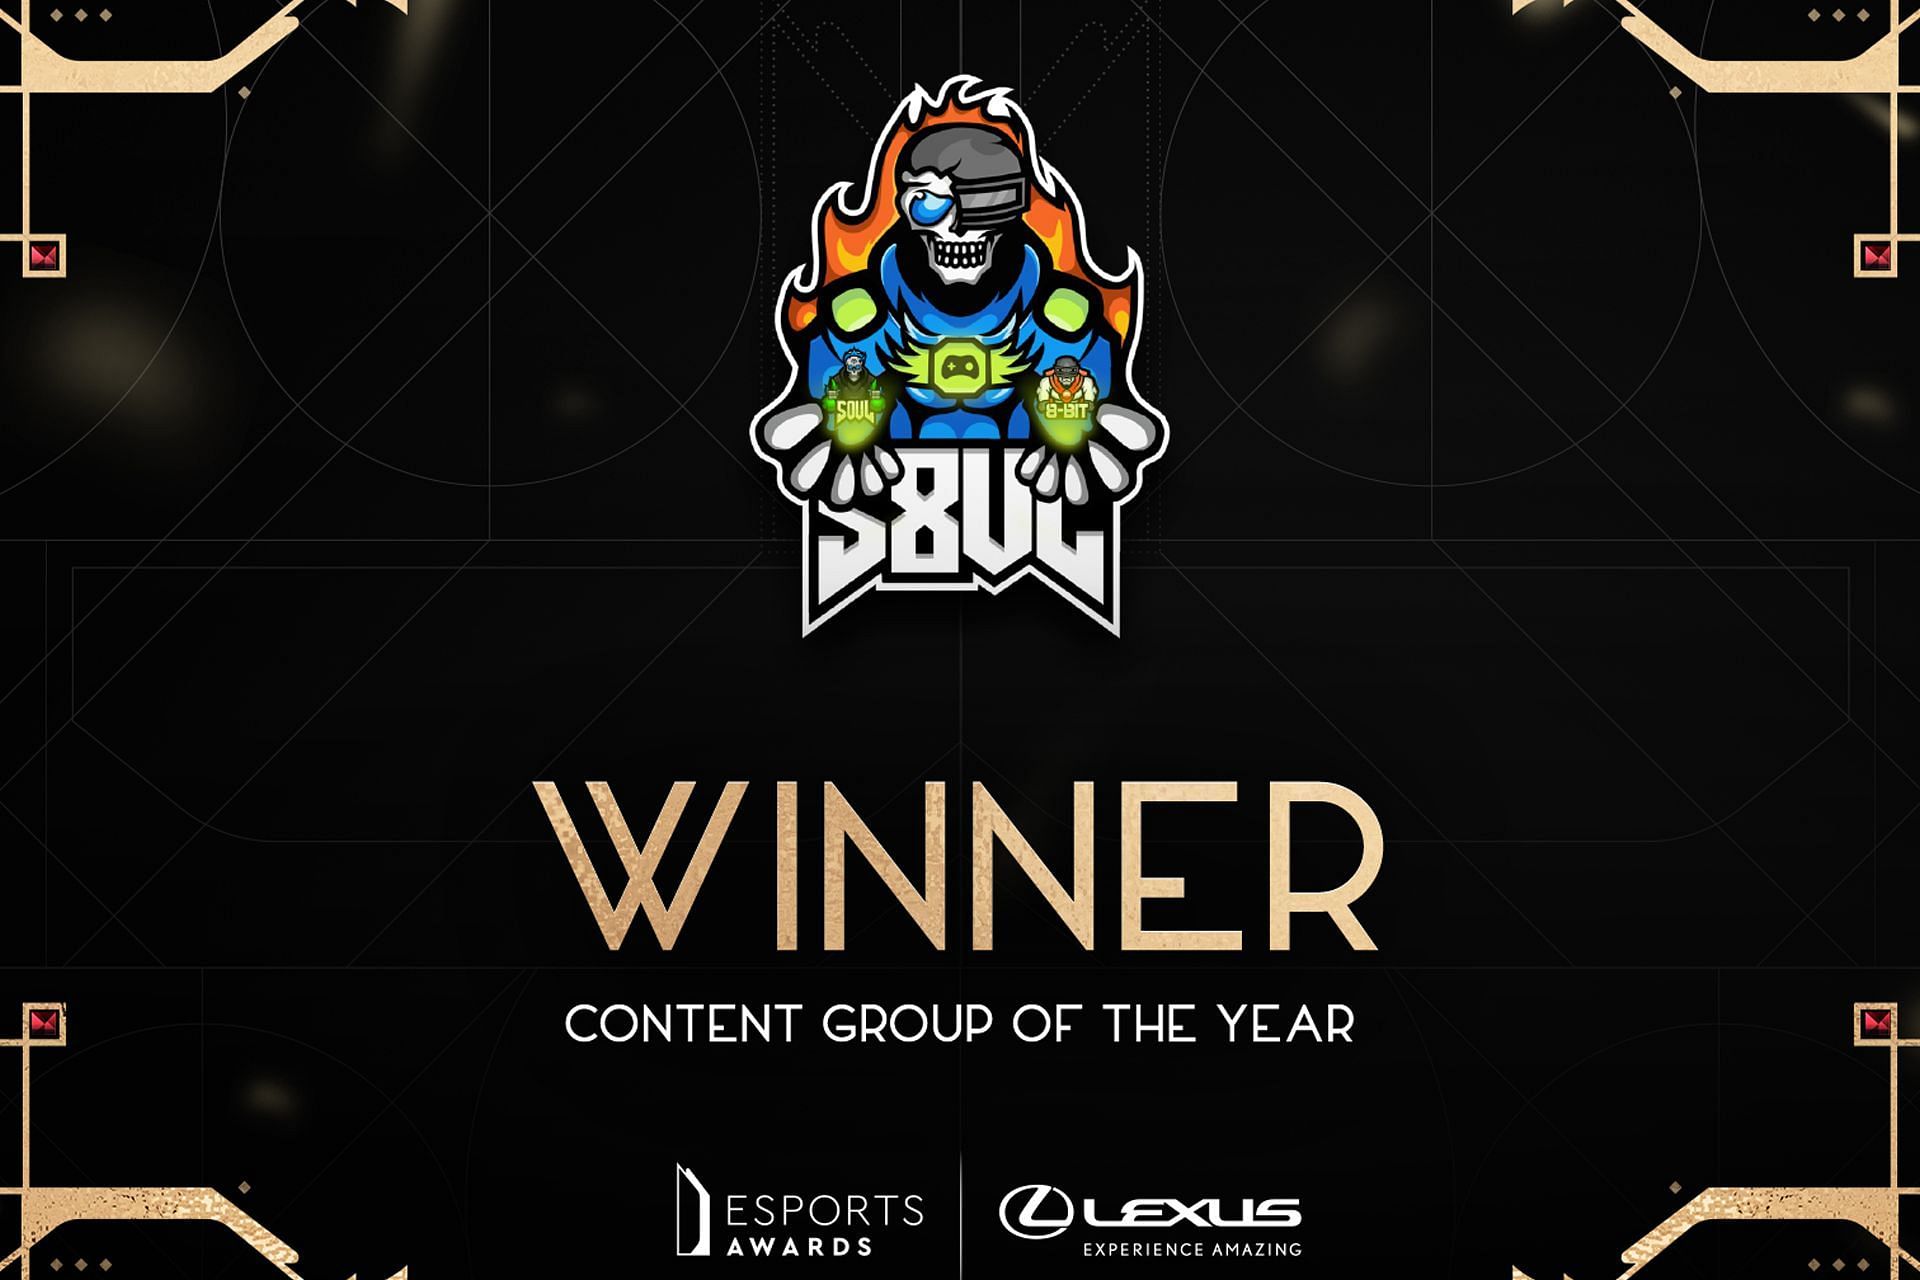 S8UL Esports wins big at Esports Awards 2022 (Image via Esports Awards)